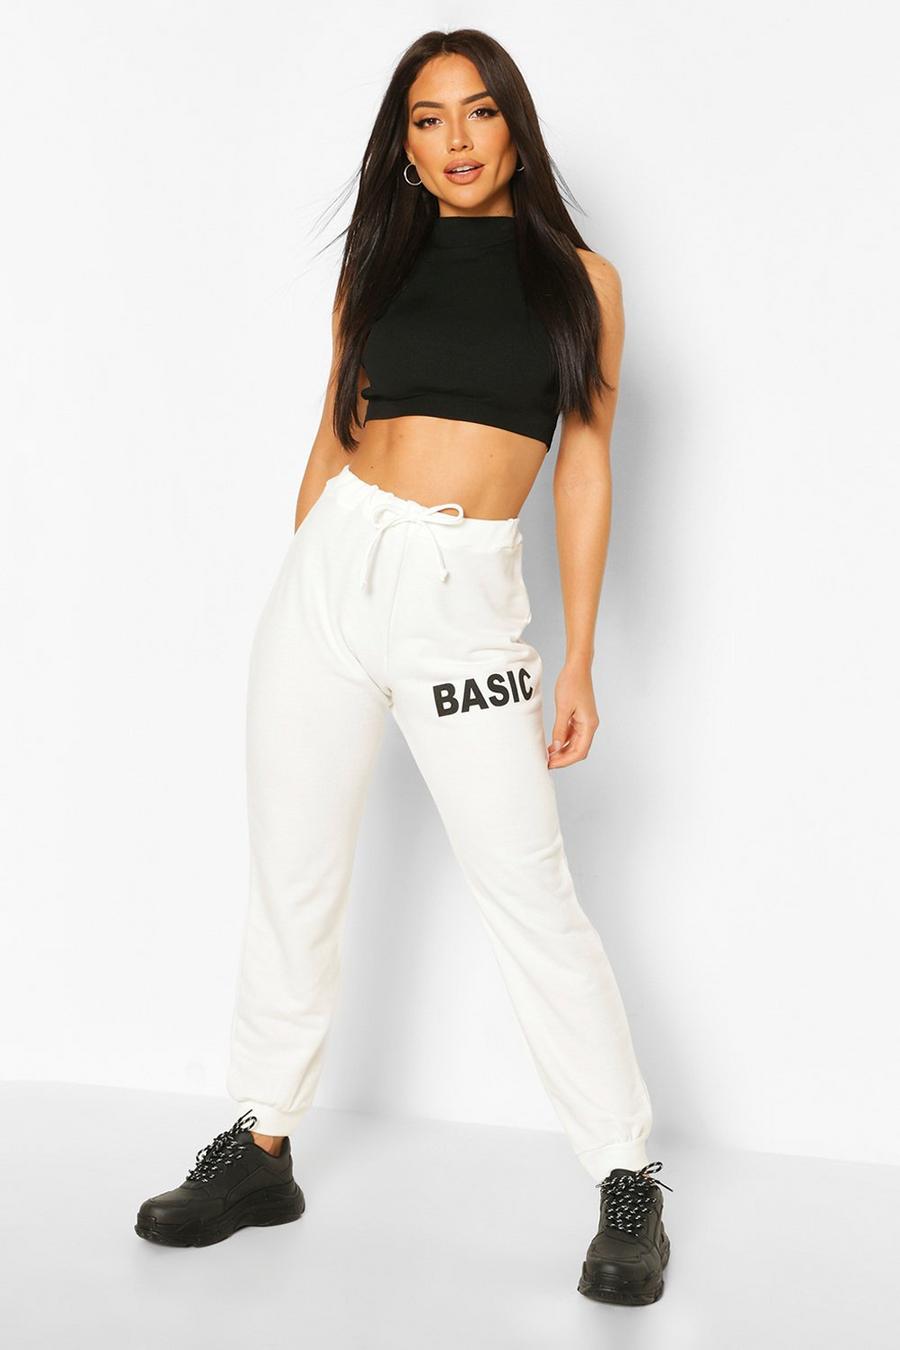 Pantalones de correr con eslogan “Basic” image number 1